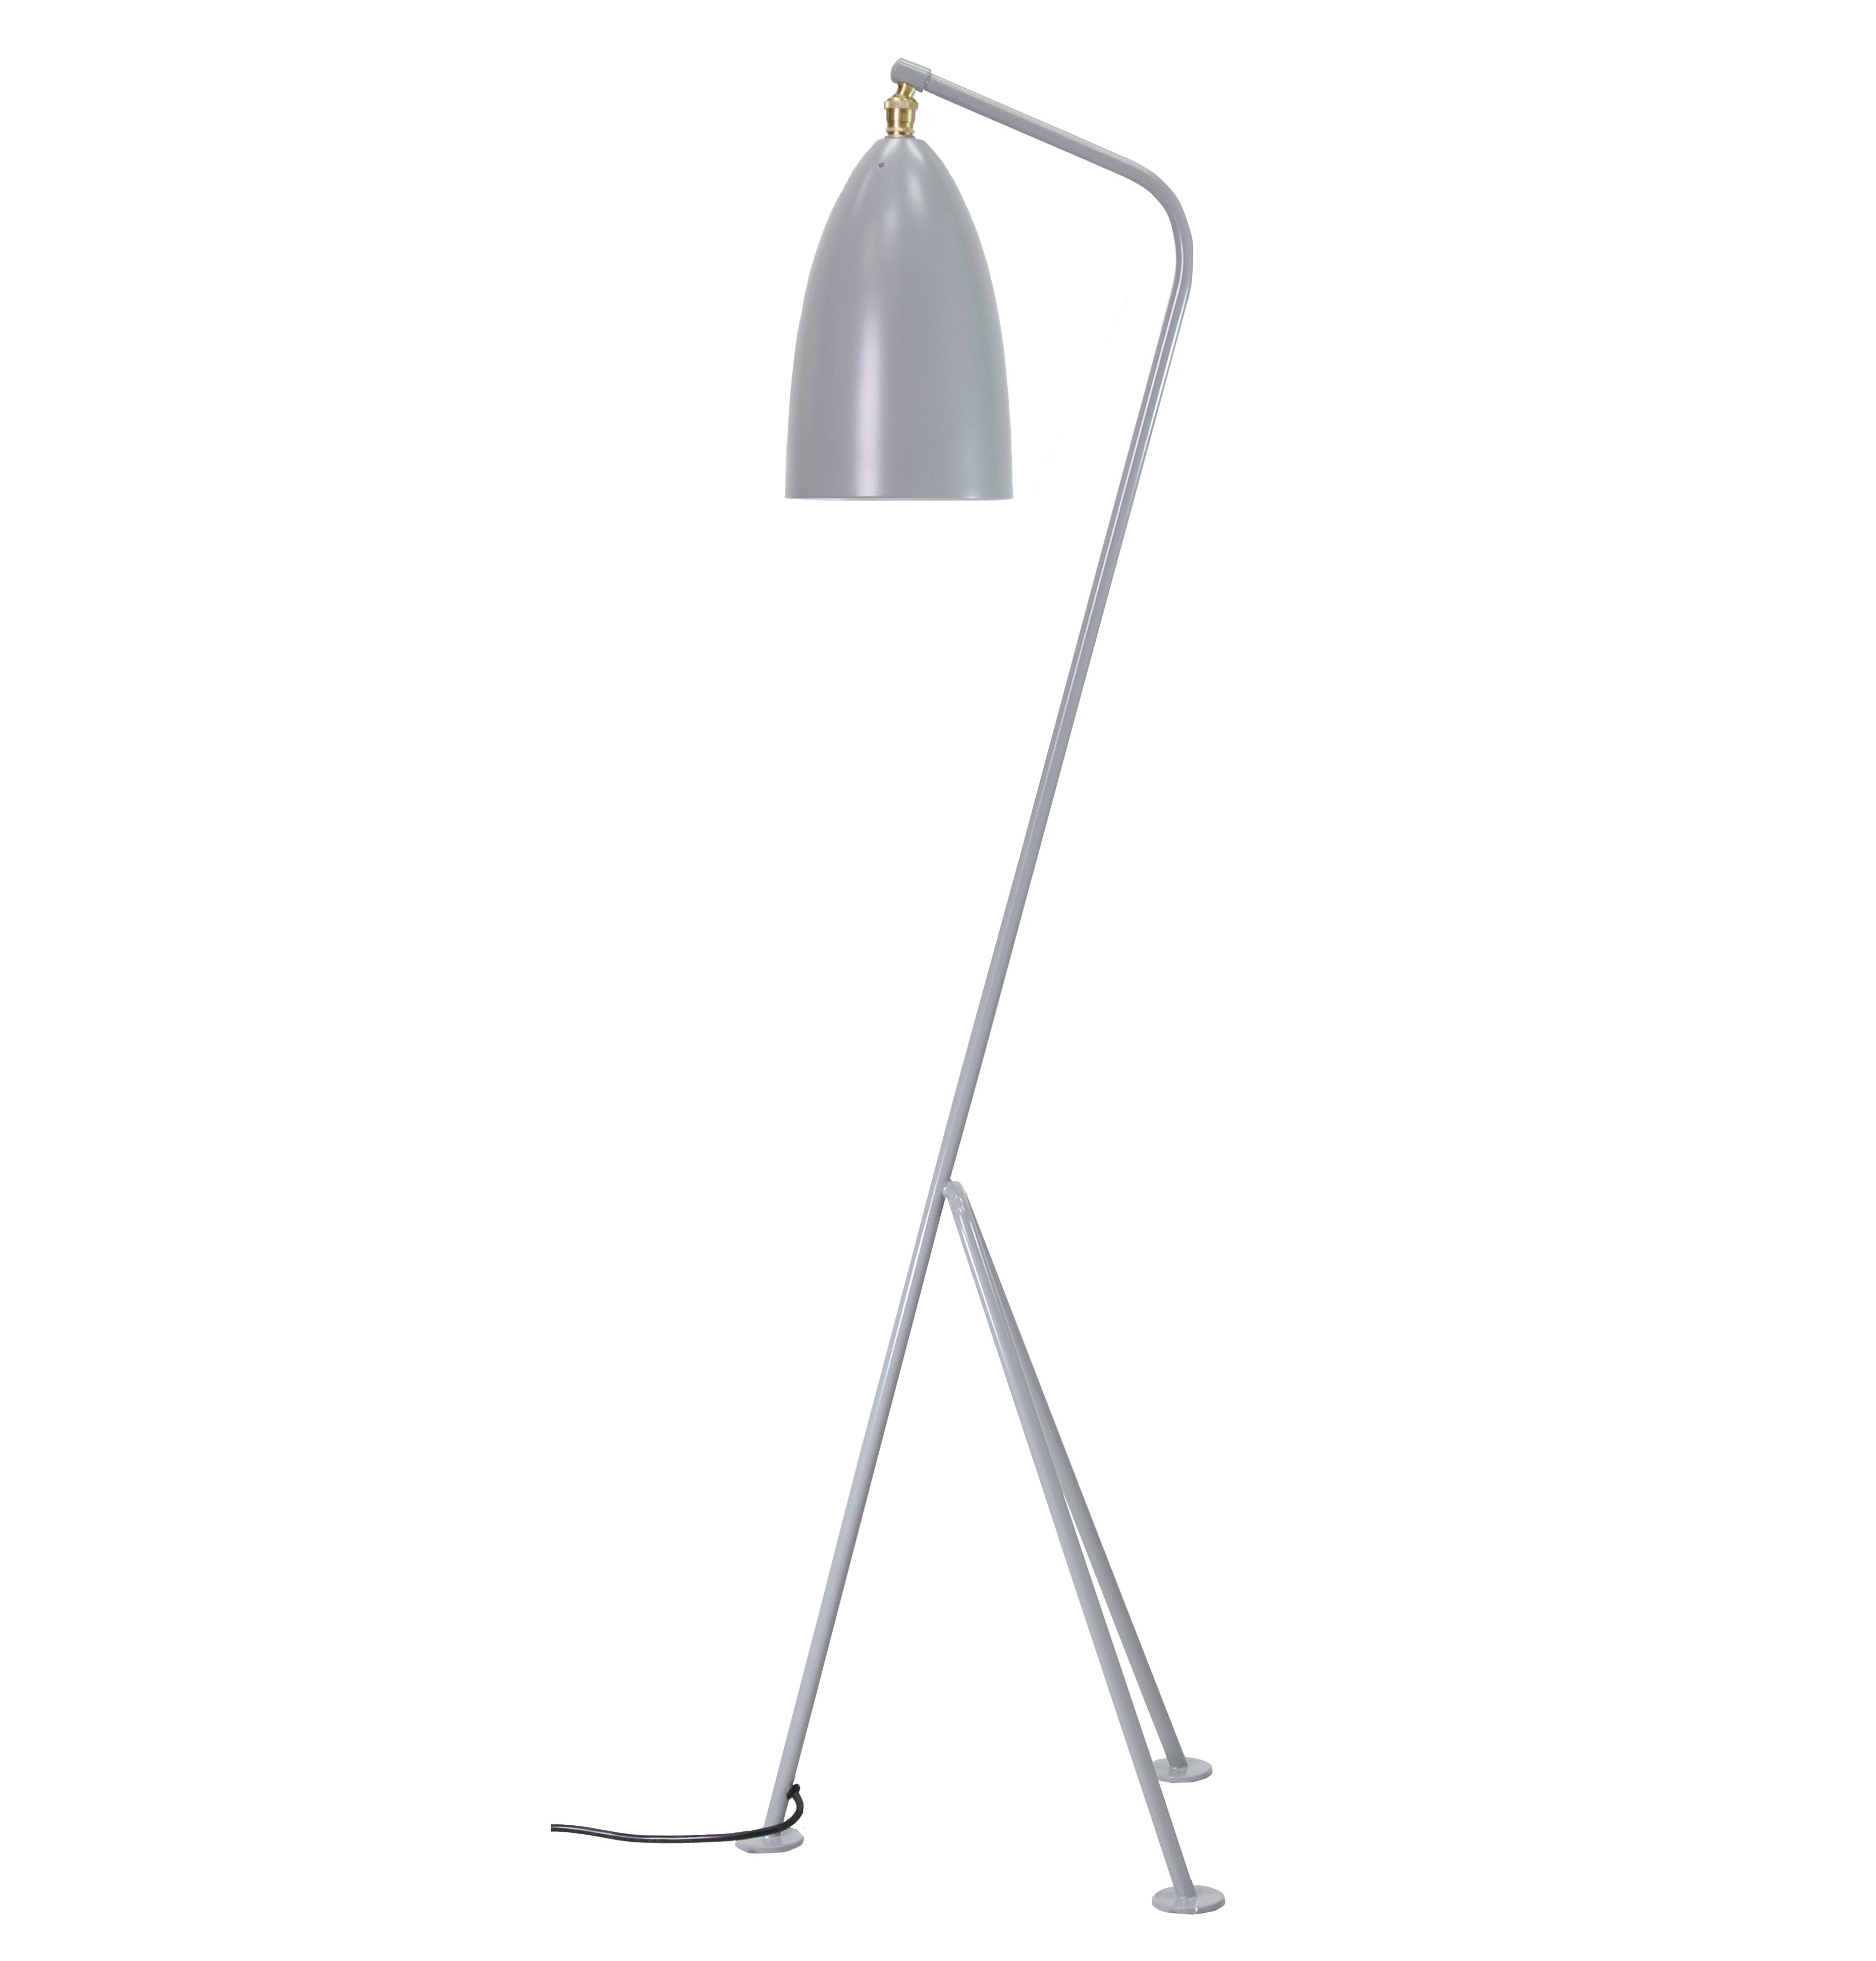 Replica Greta Grossman Grasshopper Floor Lamp Lighting throughout dimensions 3717 X 3886